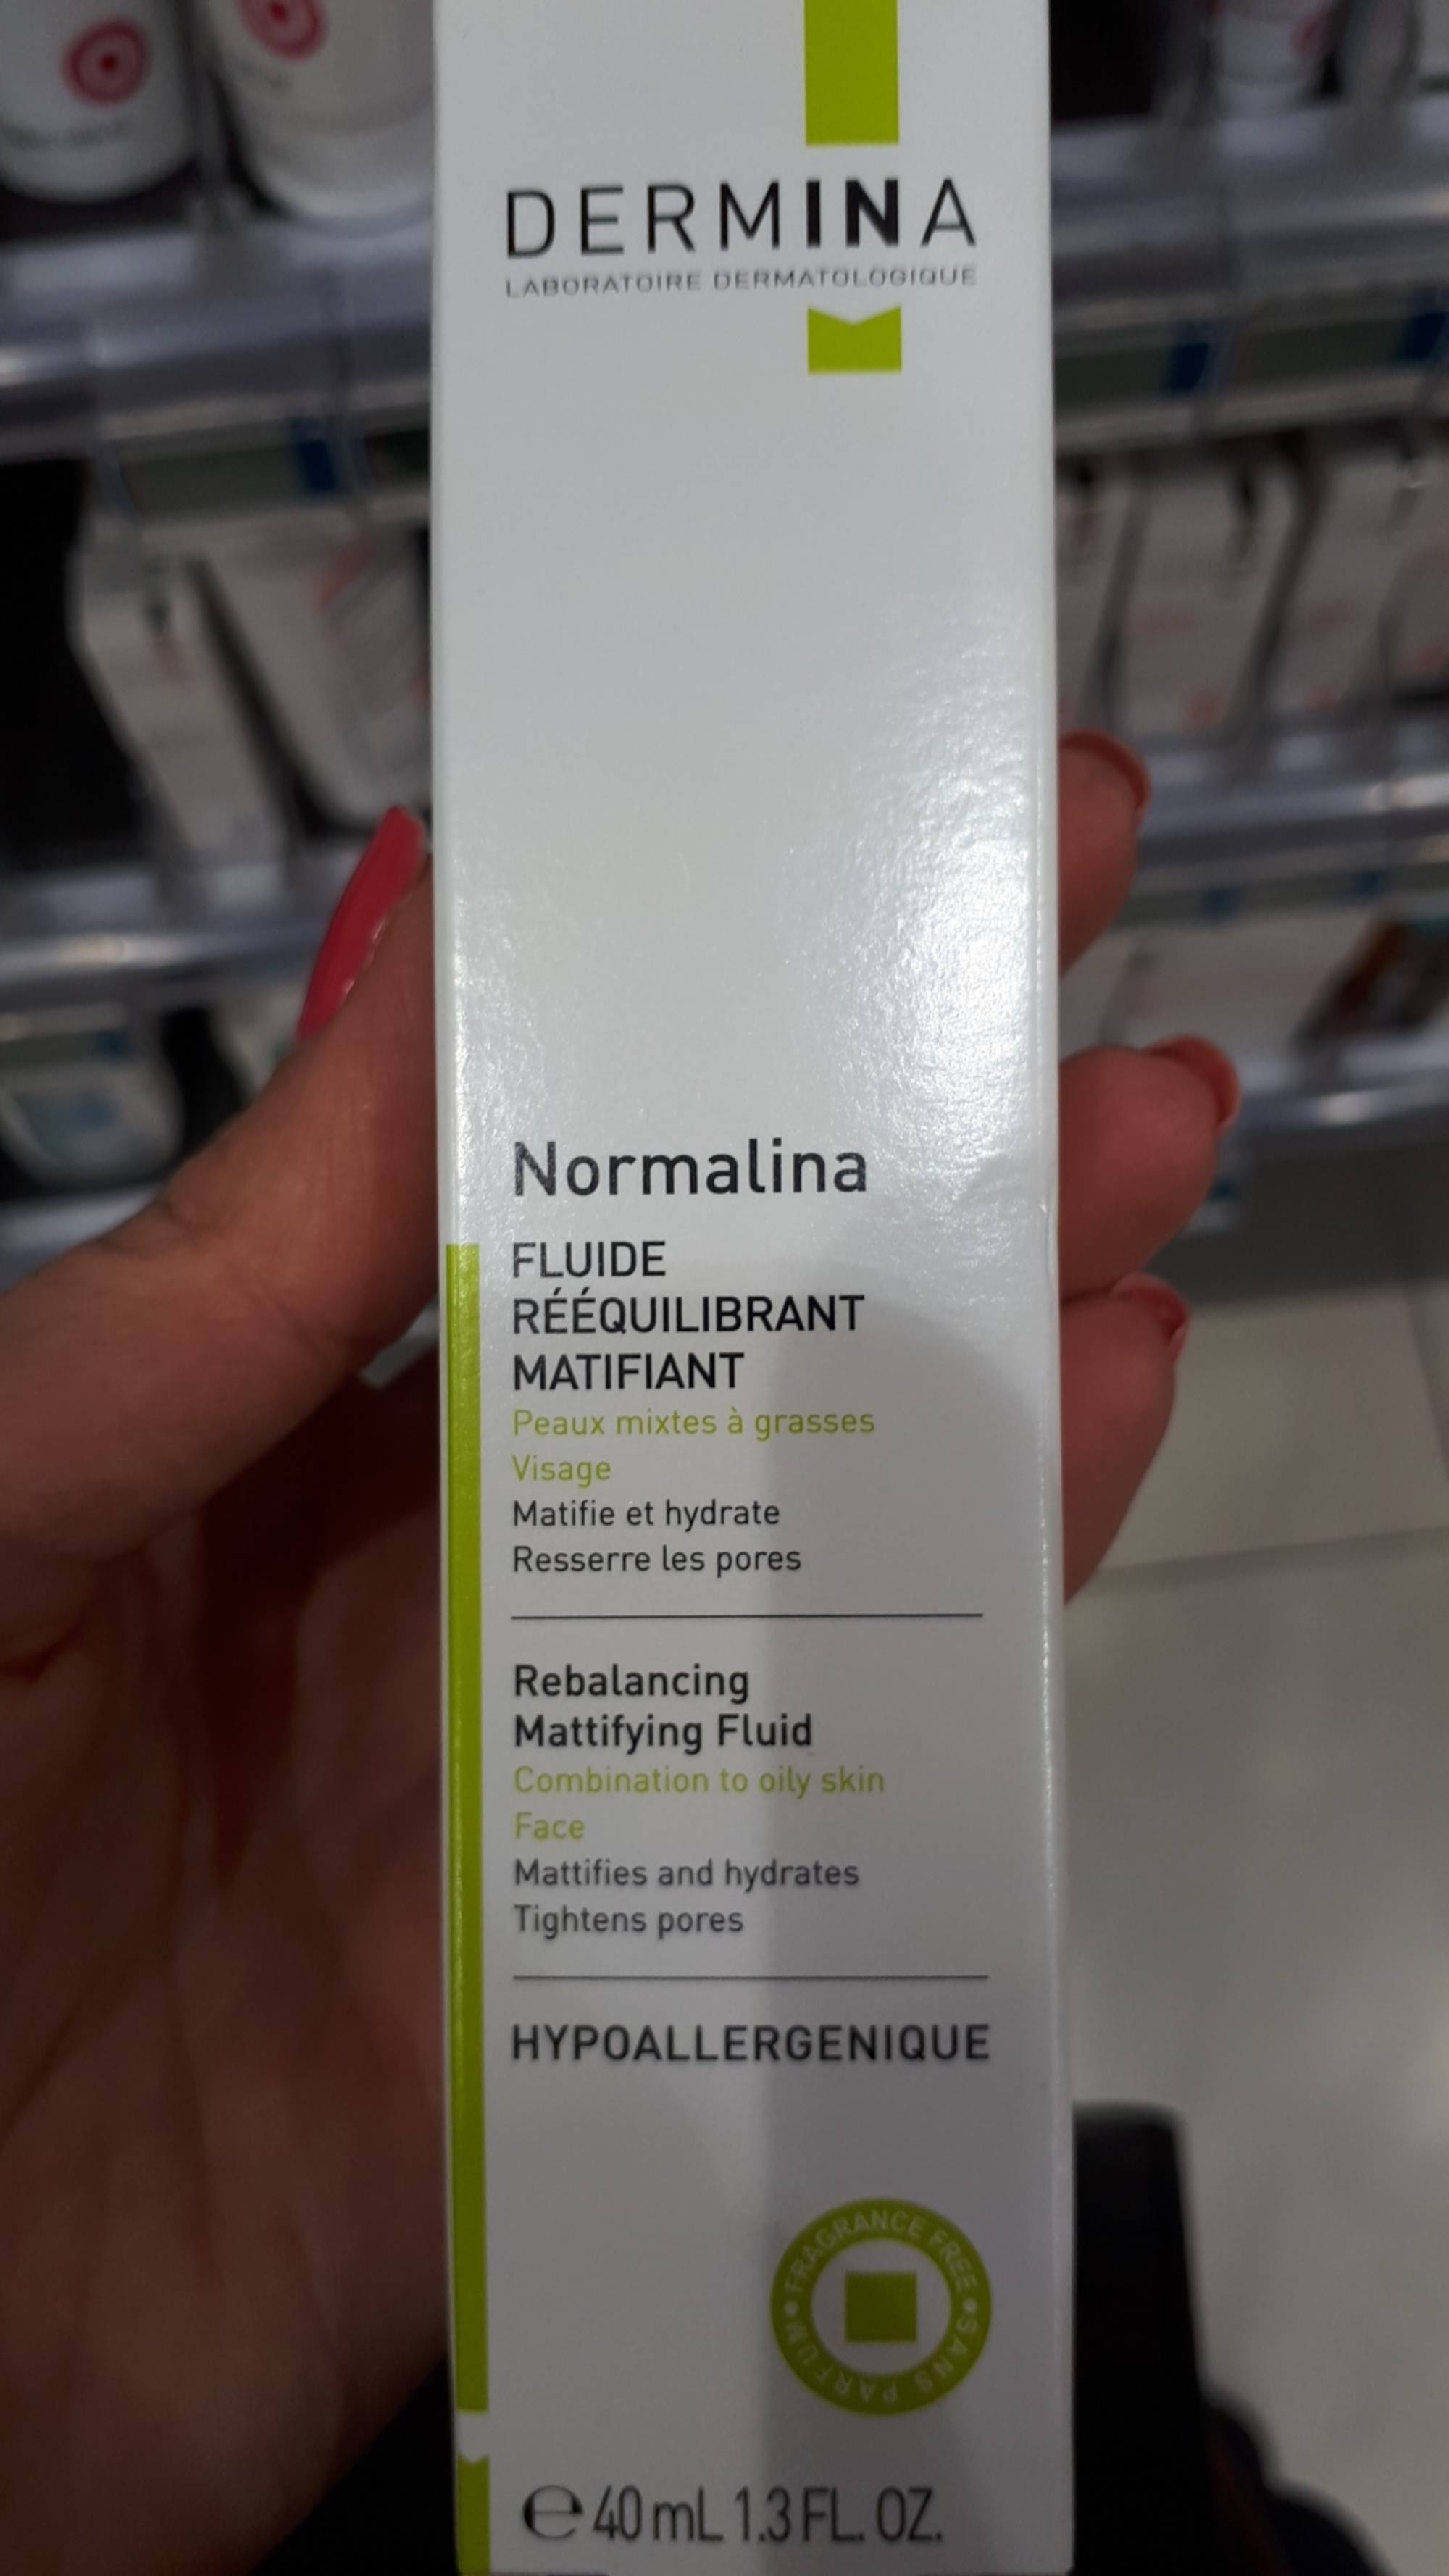 DERMINA - Normalina - Fuide rééquilibrant matifiant